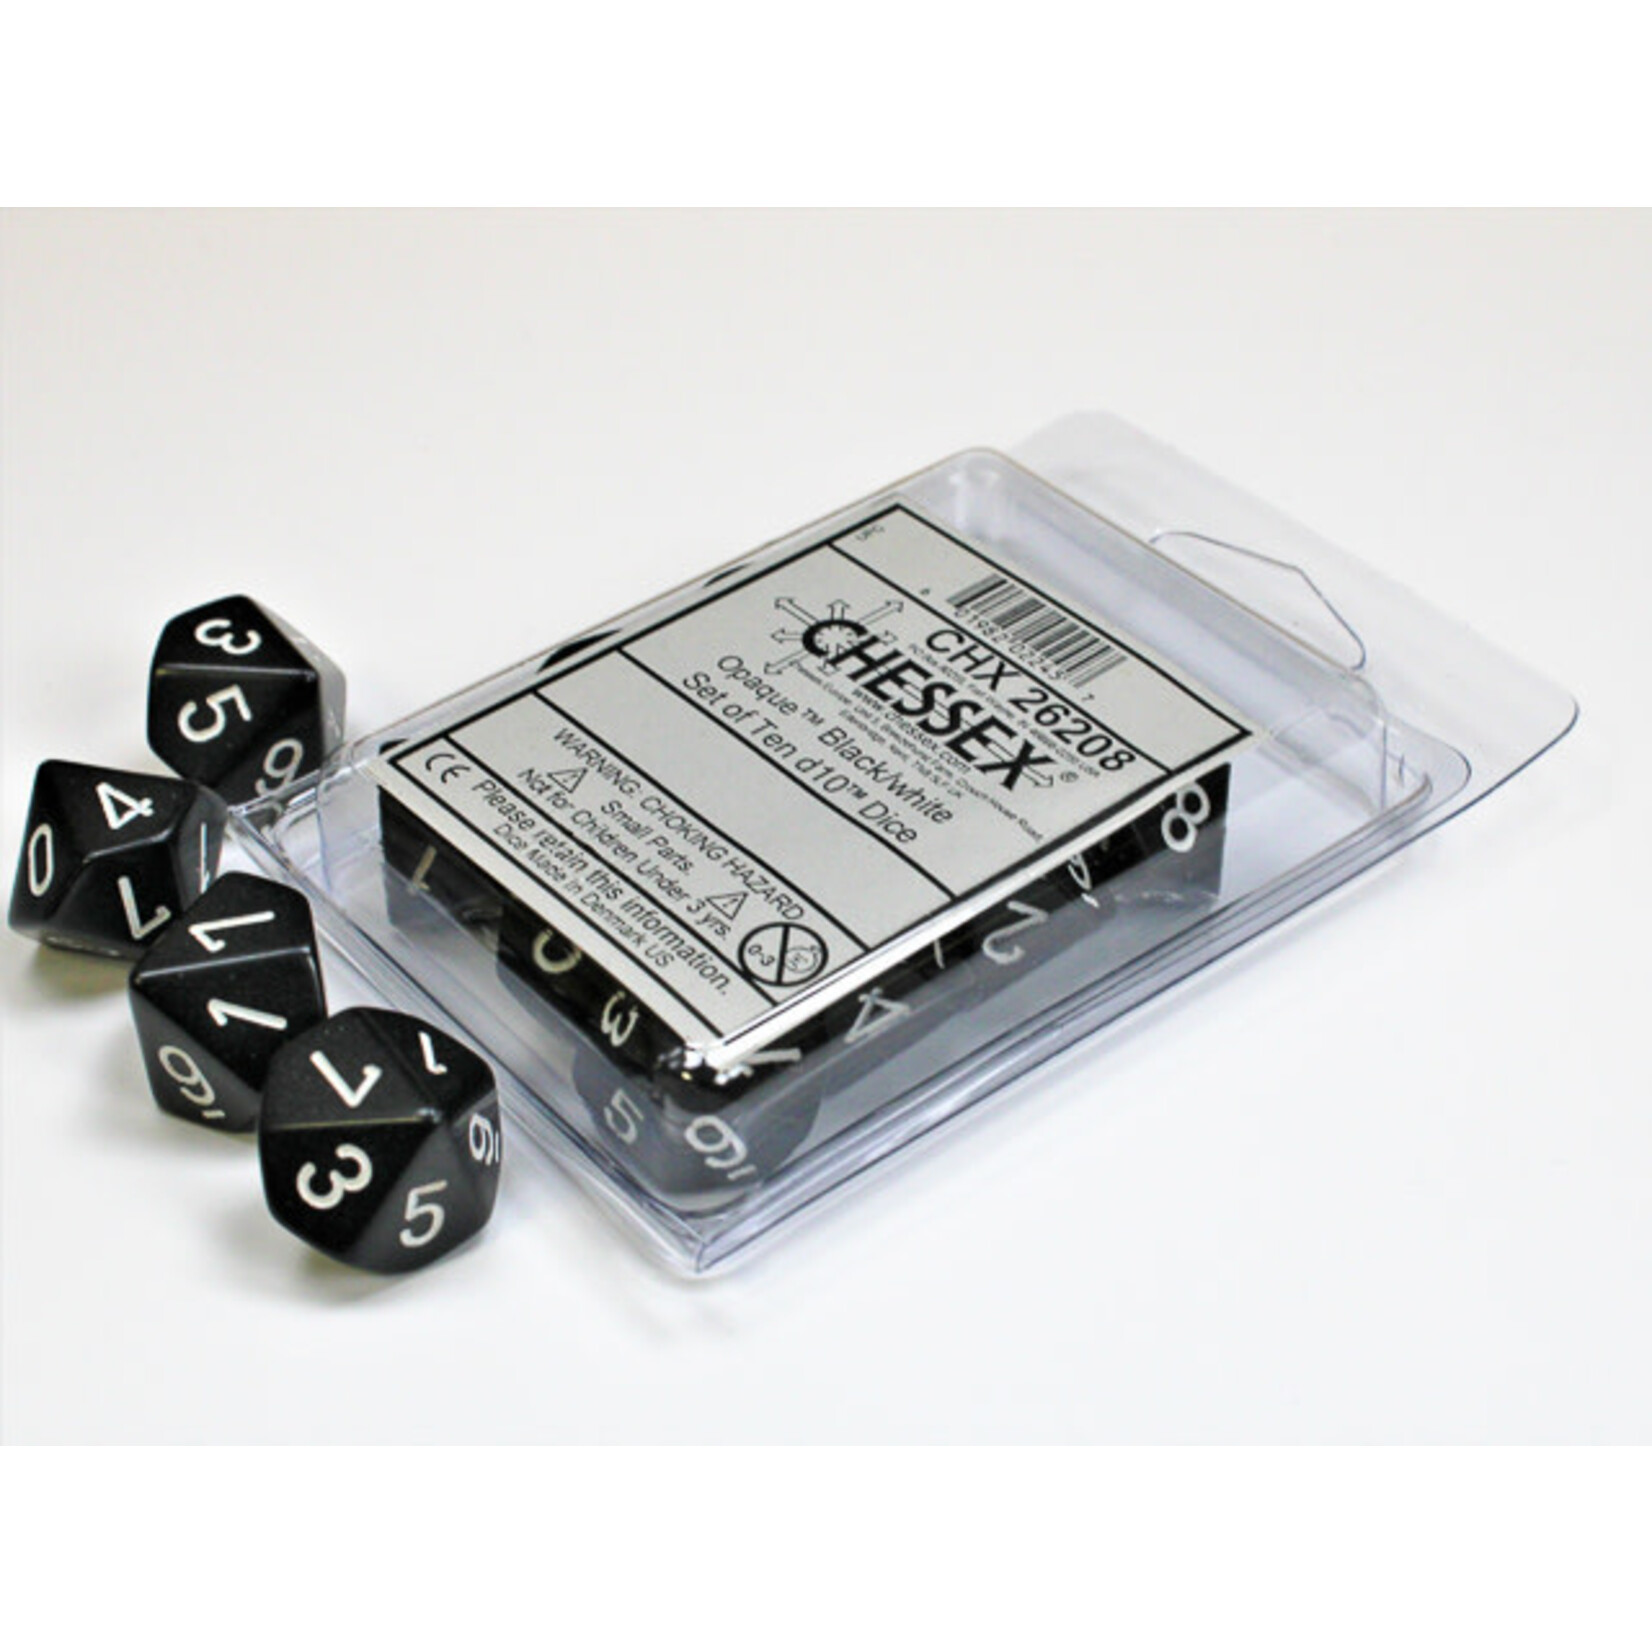 Chessex Opaque Black/white Set of Ten d10s